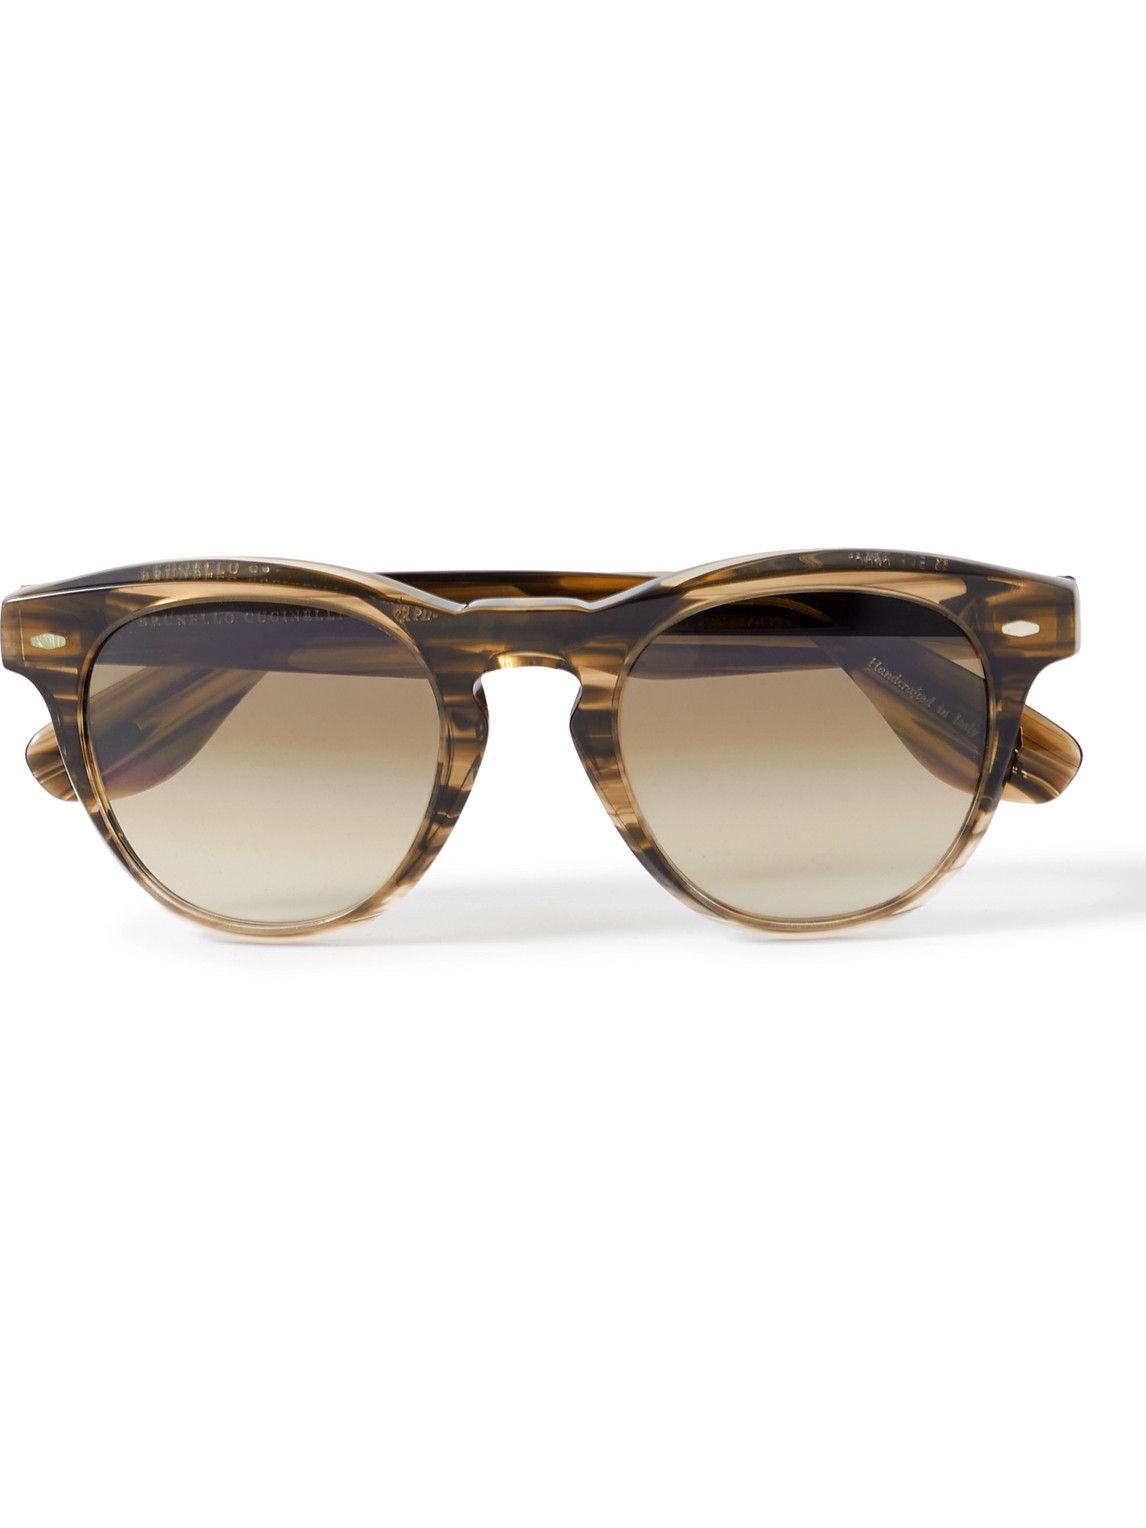 Oliver Peoples D-Frame Tortoiseshell Acetate Sunglasses